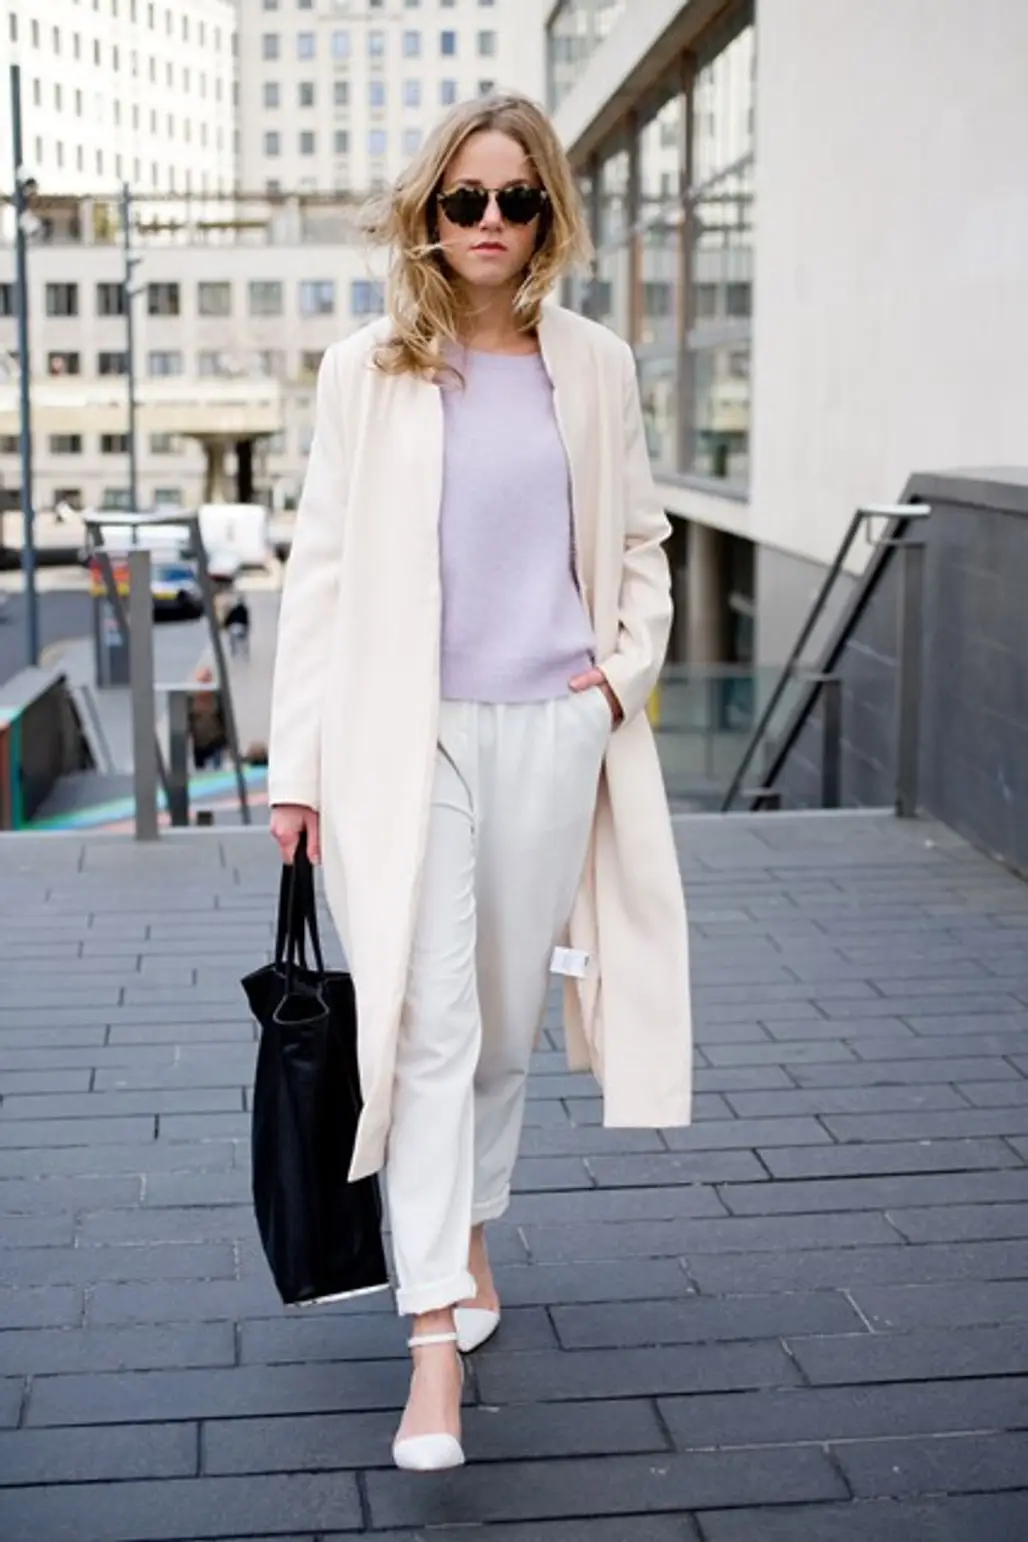 9 Fab Street Style Ways to Wear White Pants